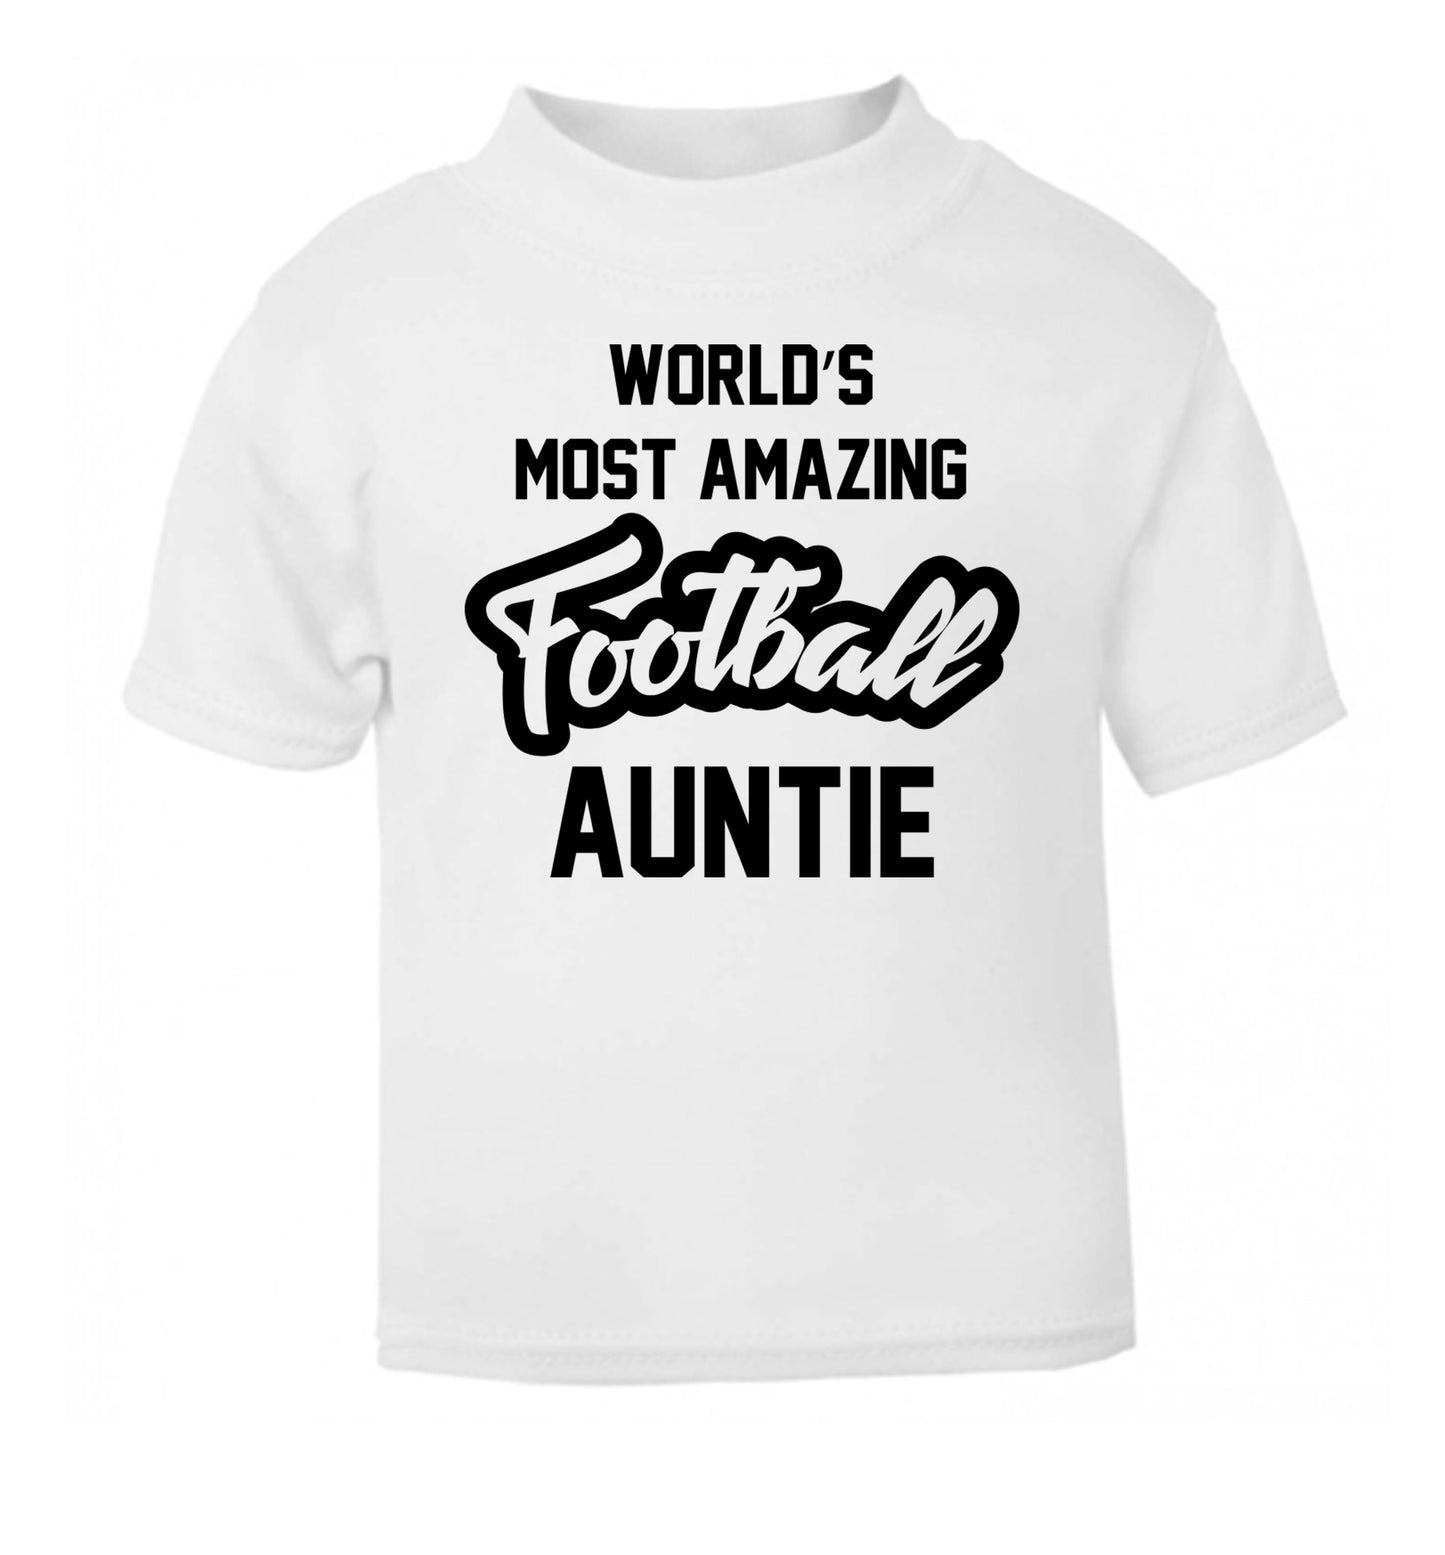 Worlds most amazing football auntie white Baby Toddler Tshirt 2 Years